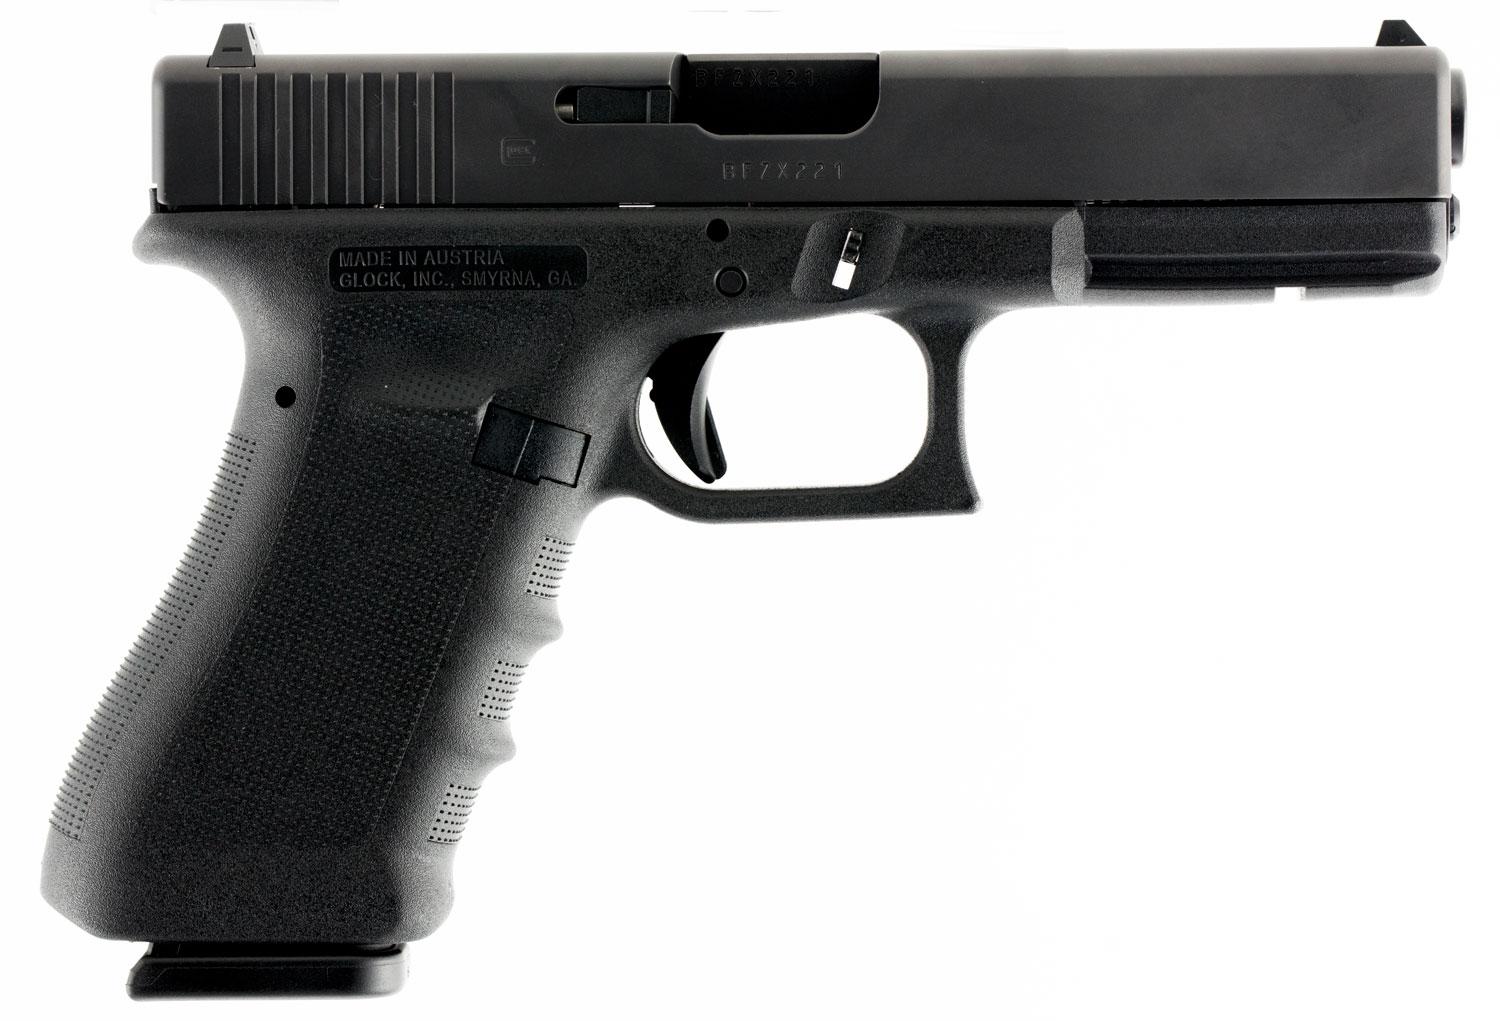 Glock G17 Gen3 RTF Pistol PT1750201, 9mm Luger, 4.48", Black Polymer Grip/Frame, Black Finish, 10 Rd